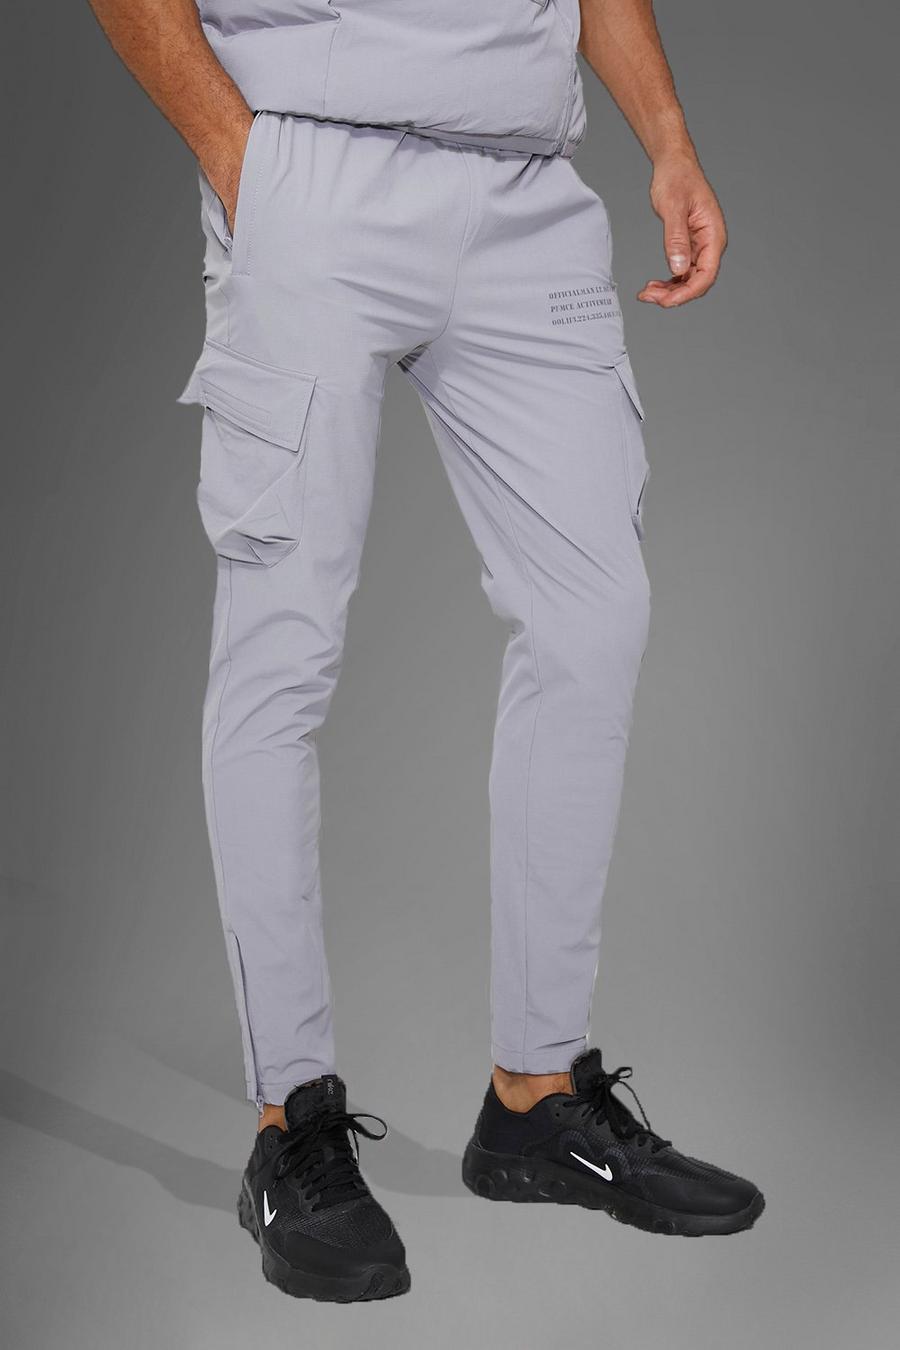 Pantaloni tuta Man Active Gym tecnici stile Cargo, Light grey grigio